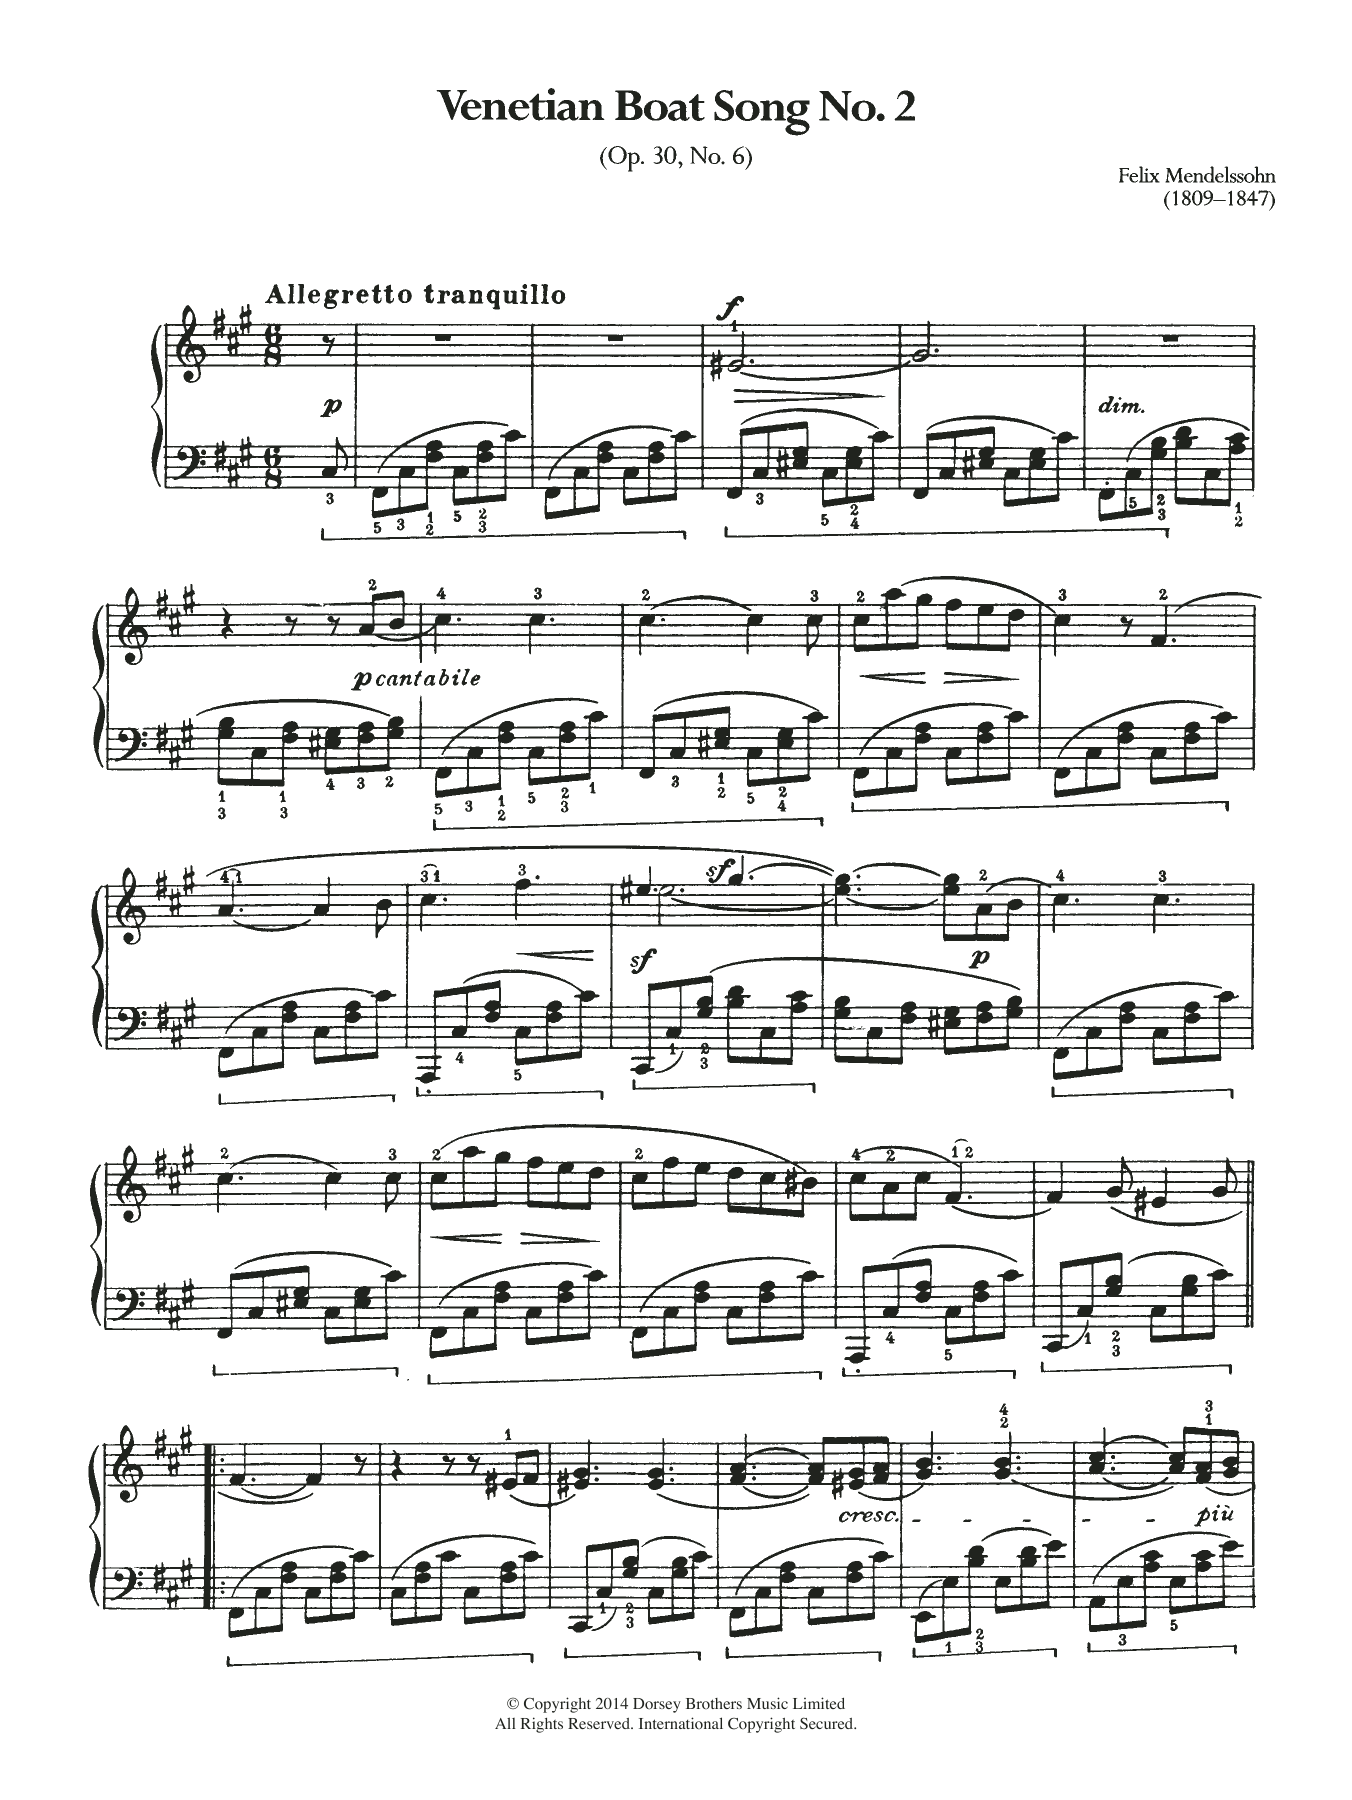 Download Felix Mendelssohn Venetian Boat Song No.2 Sheet Music